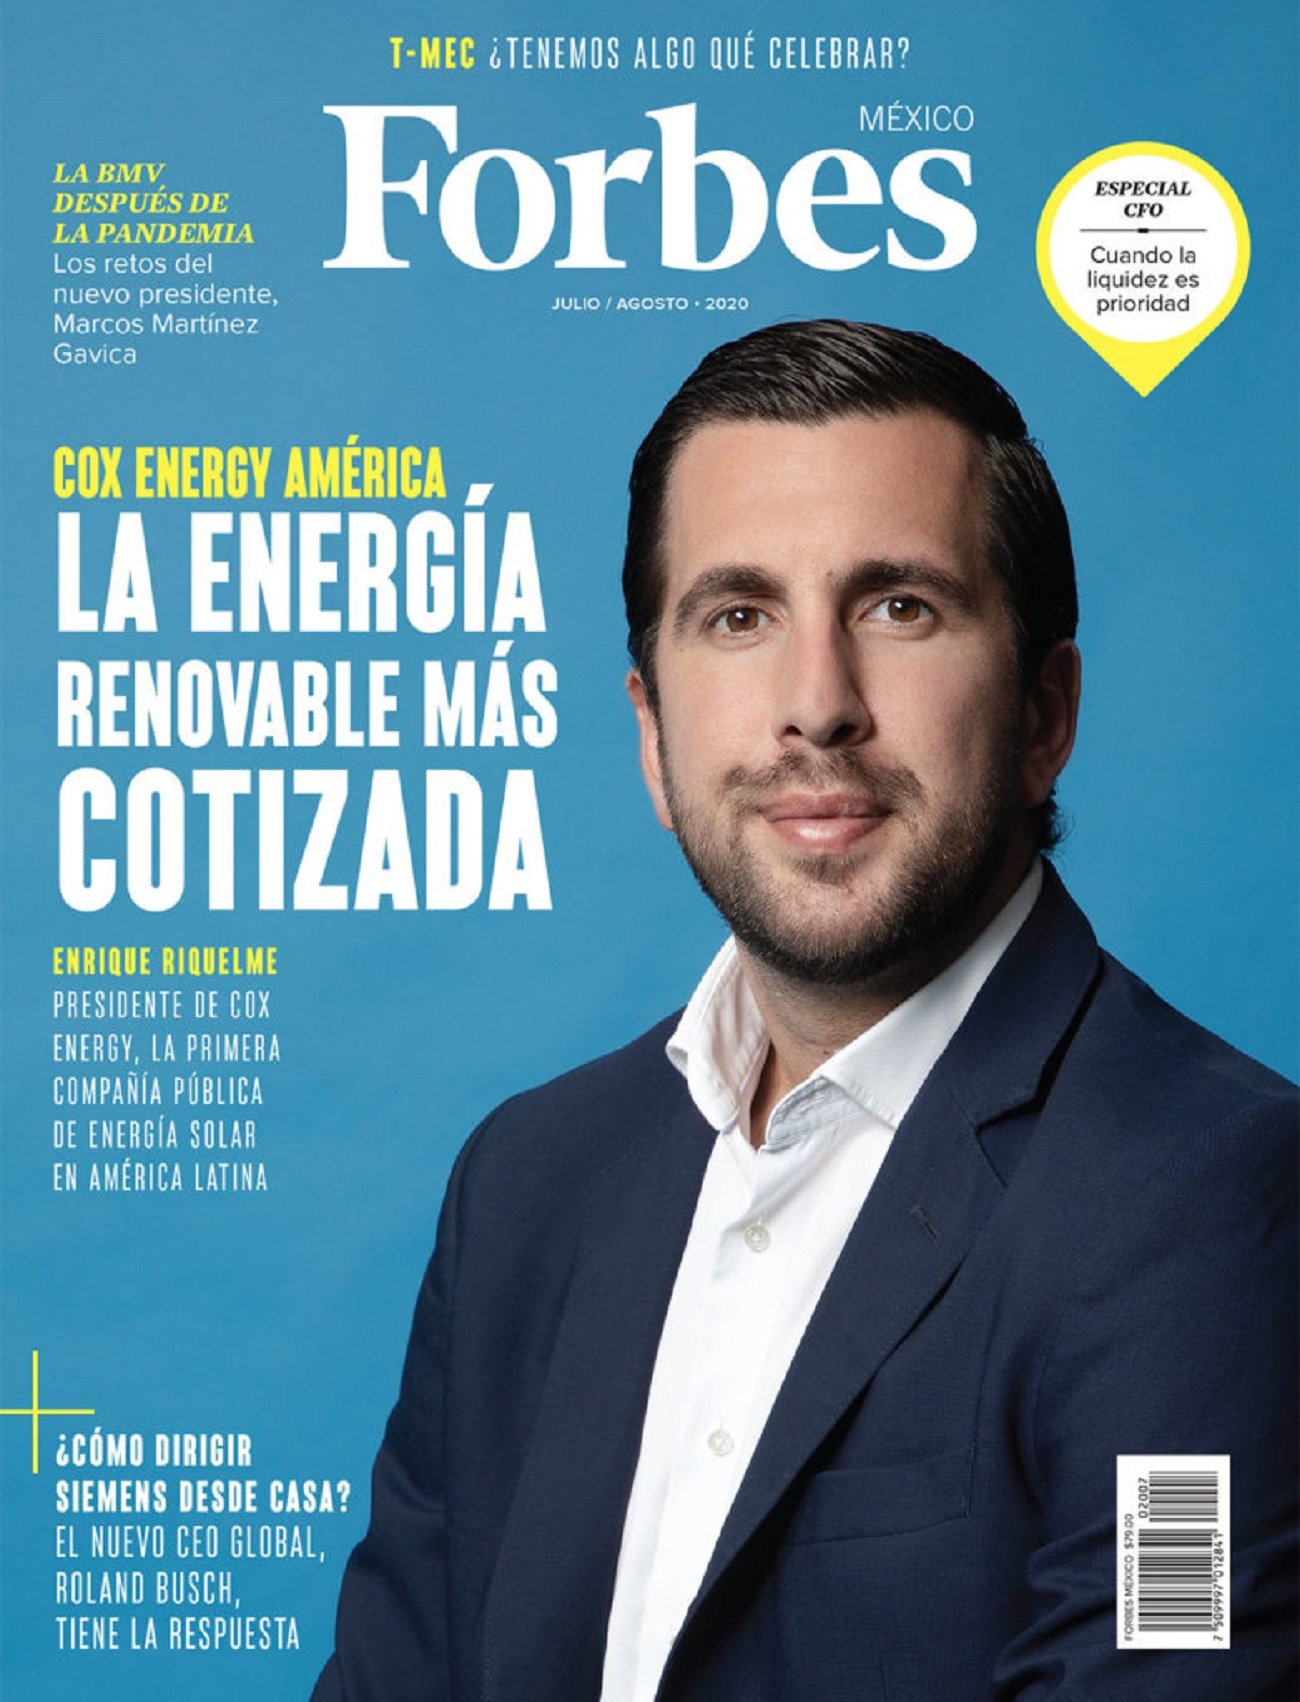 Enrique Riquelme Forbes México